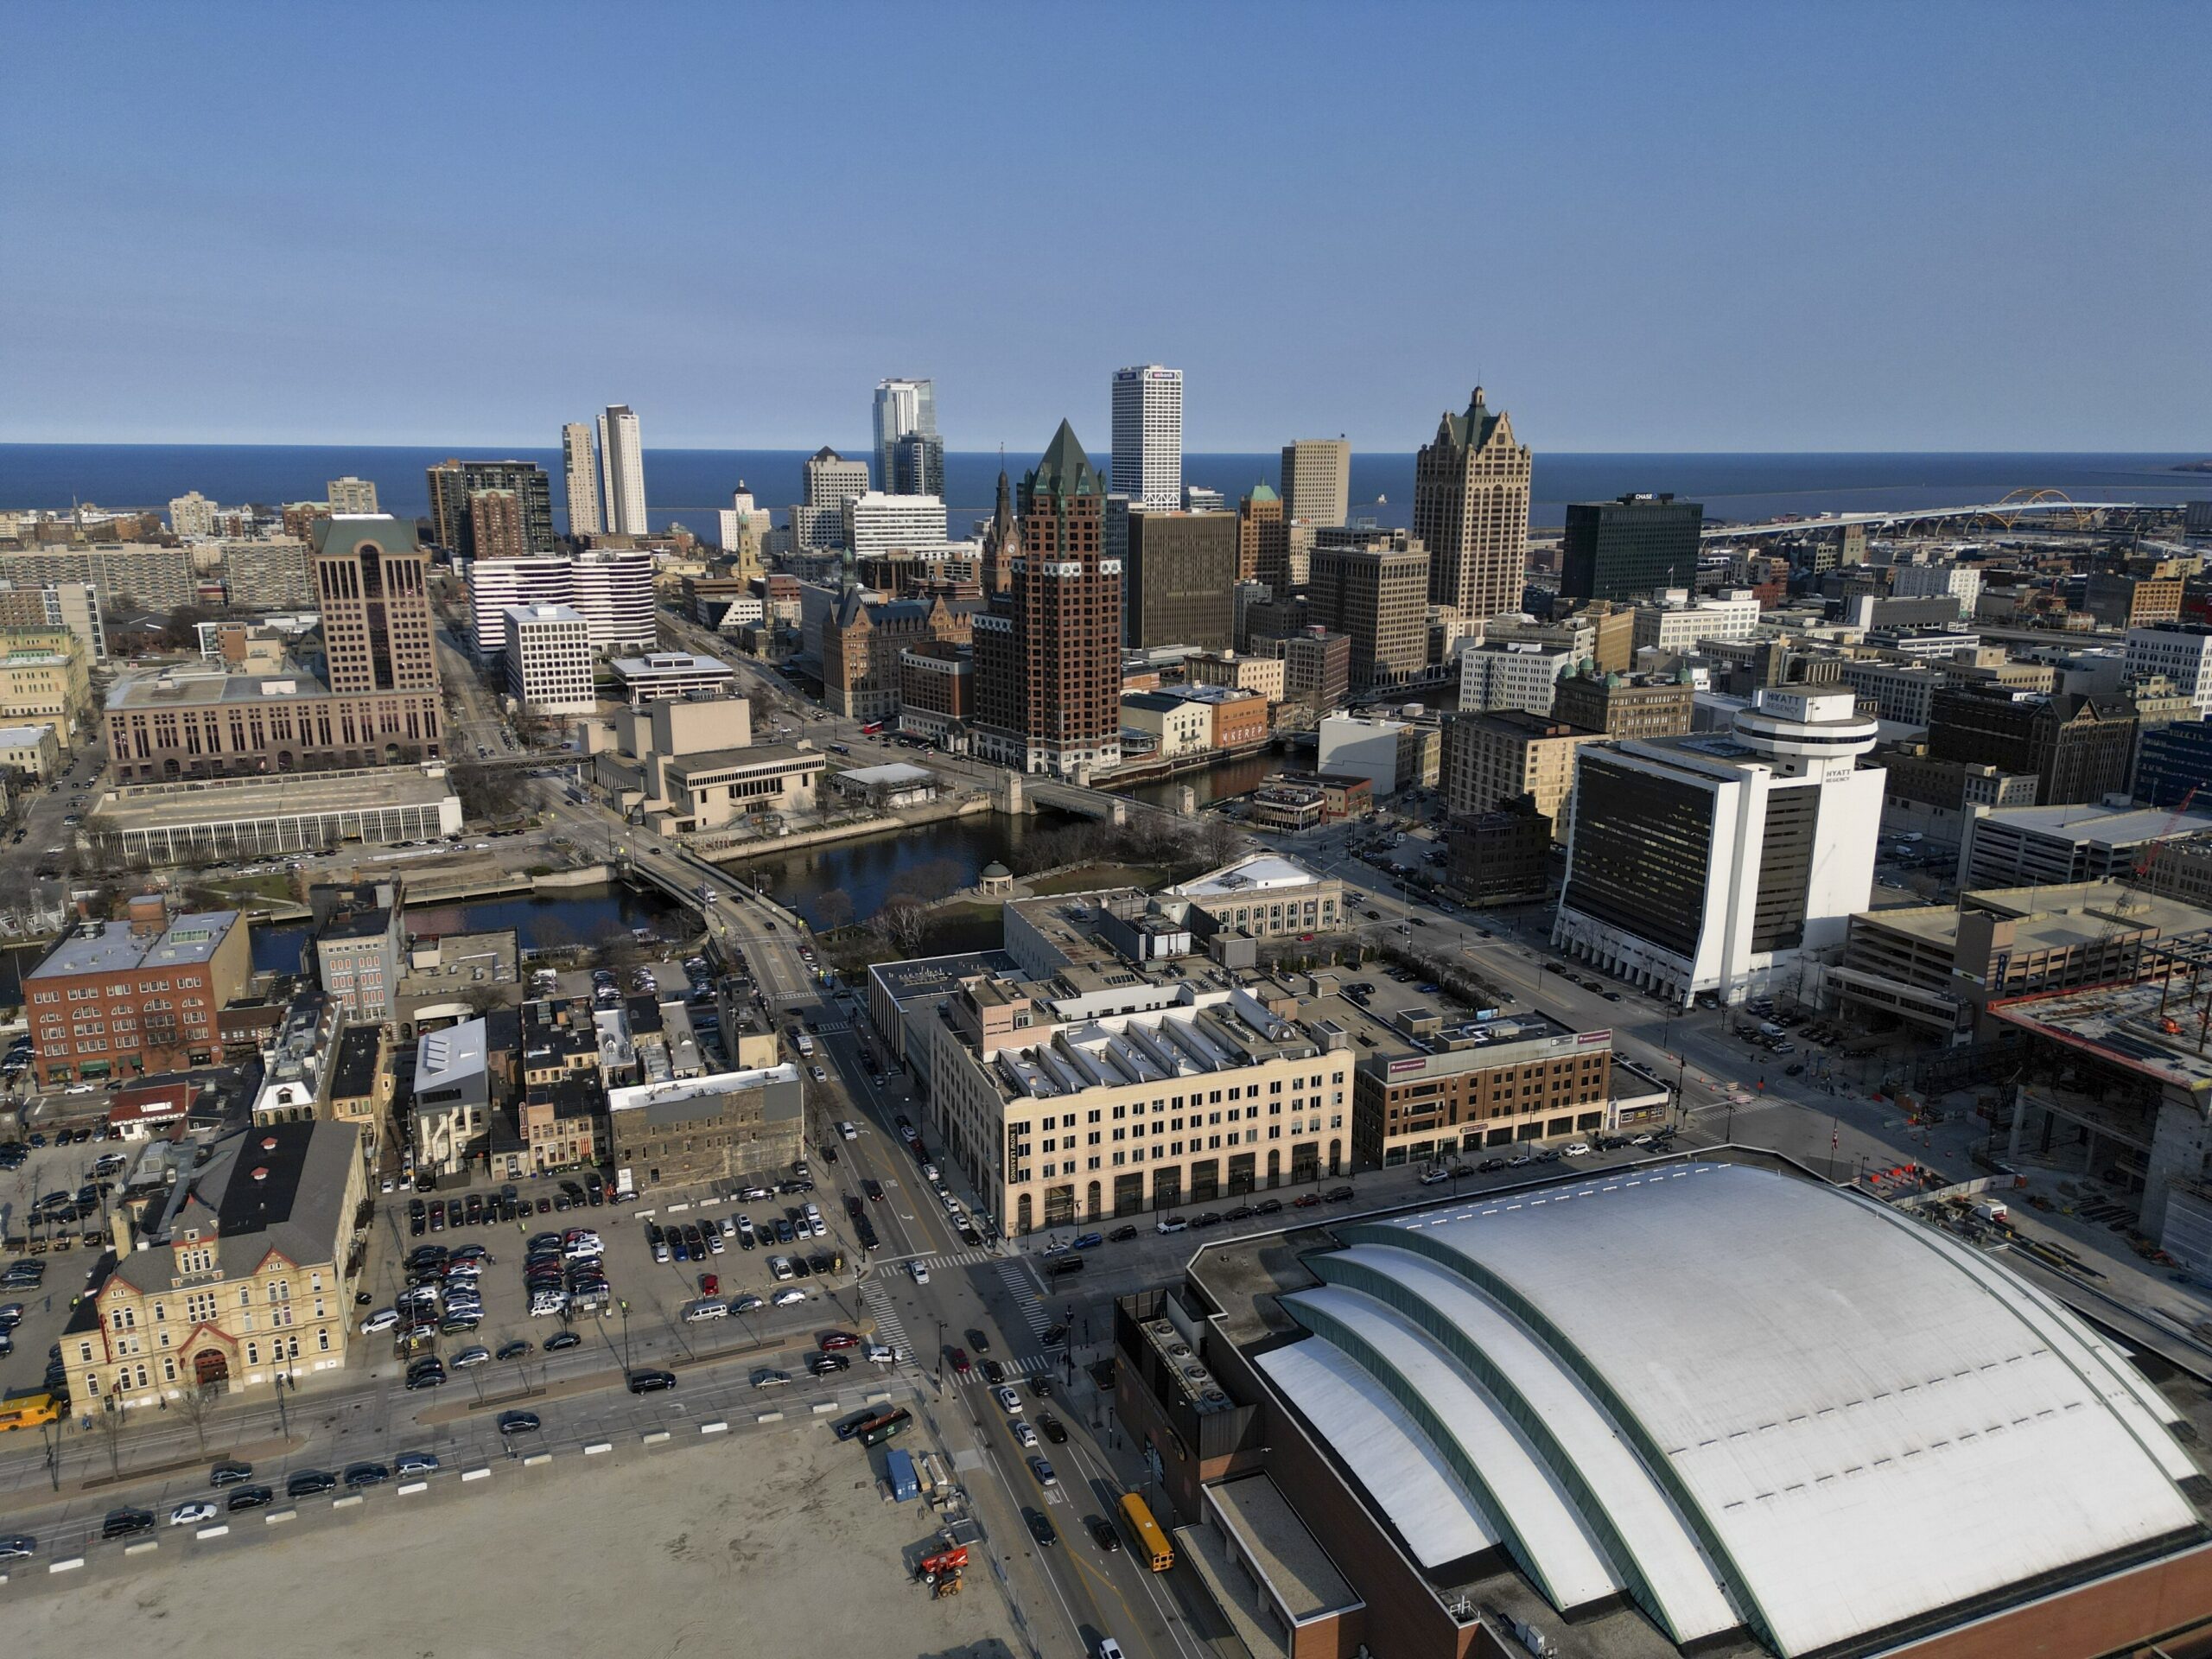 The Milwaukee city skyline